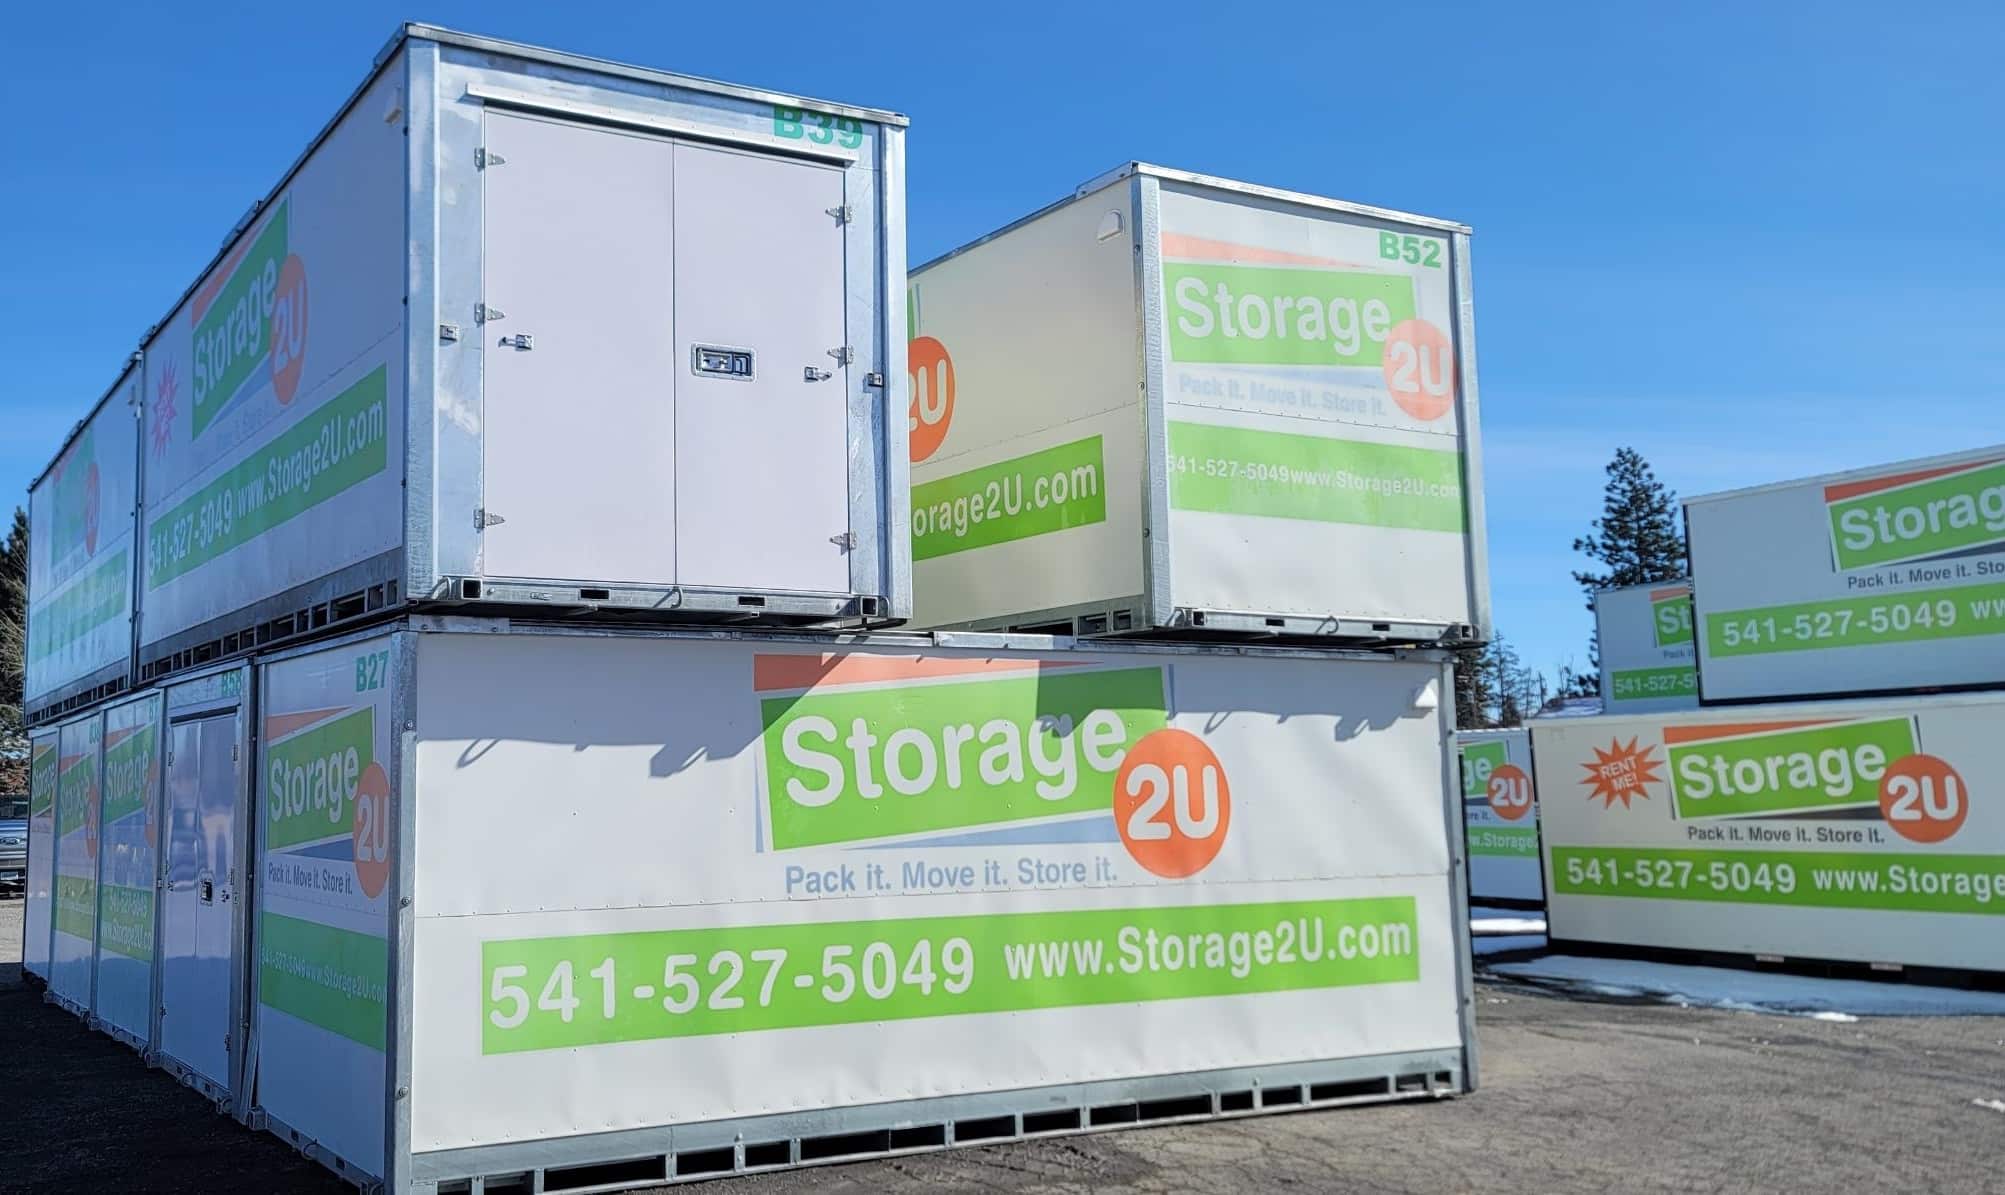 Off-site storage yard for long term pod storage